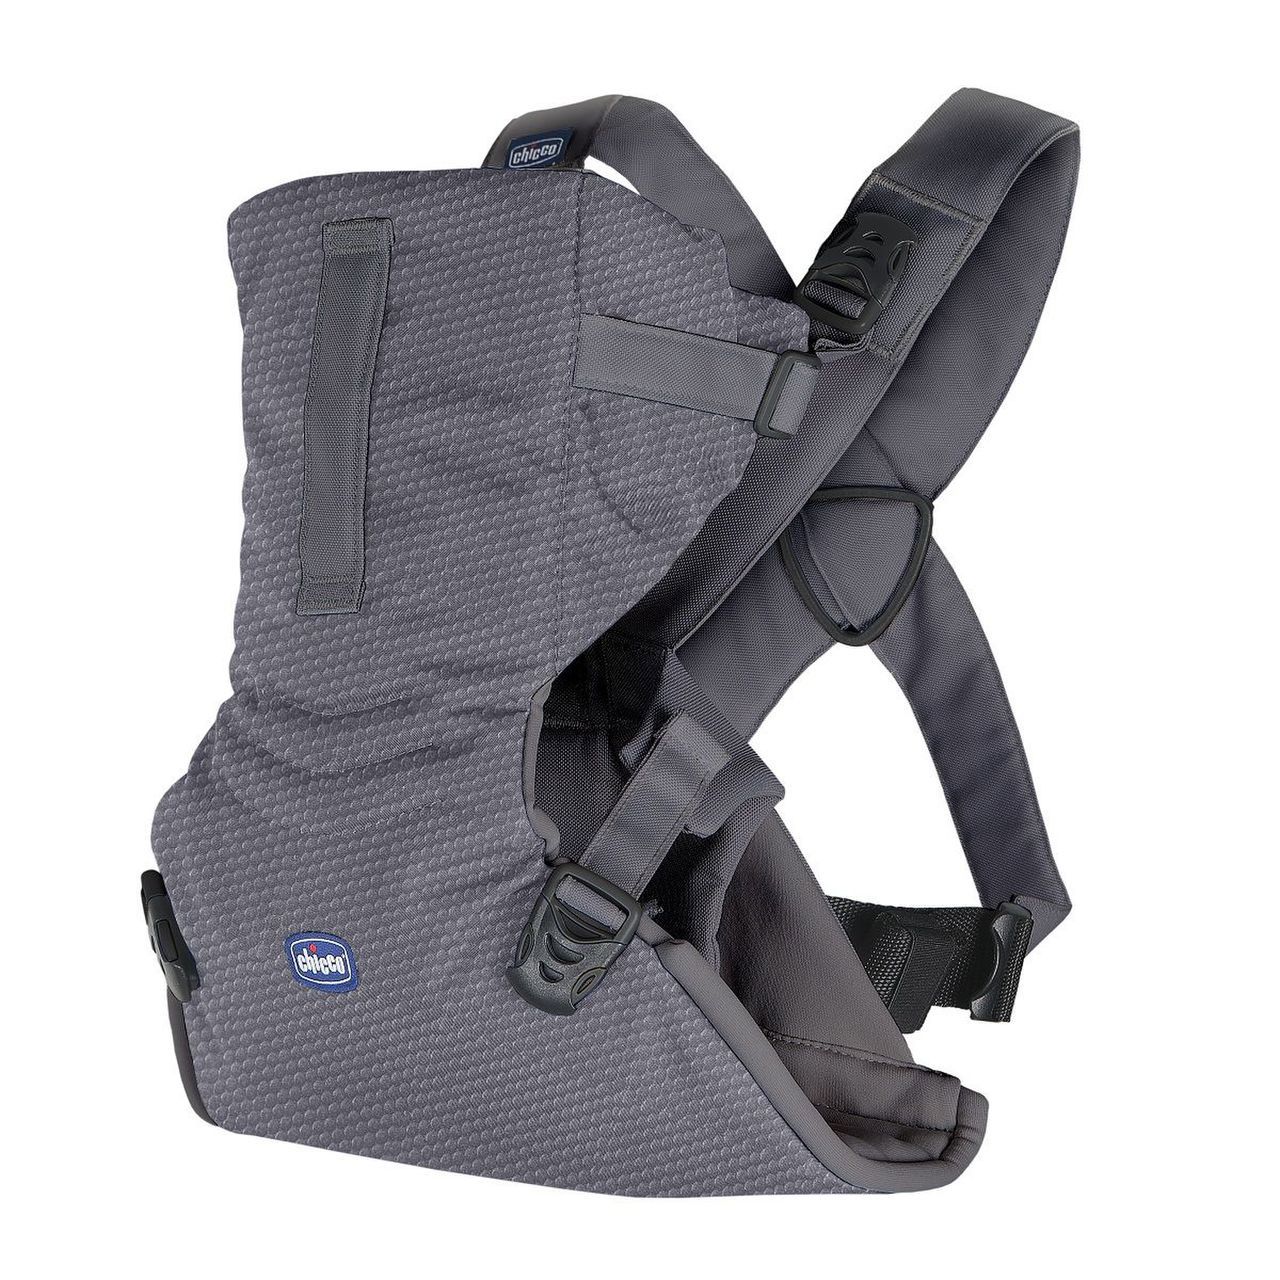 Easybaby™  Porte bébé ergonomique – Omamans